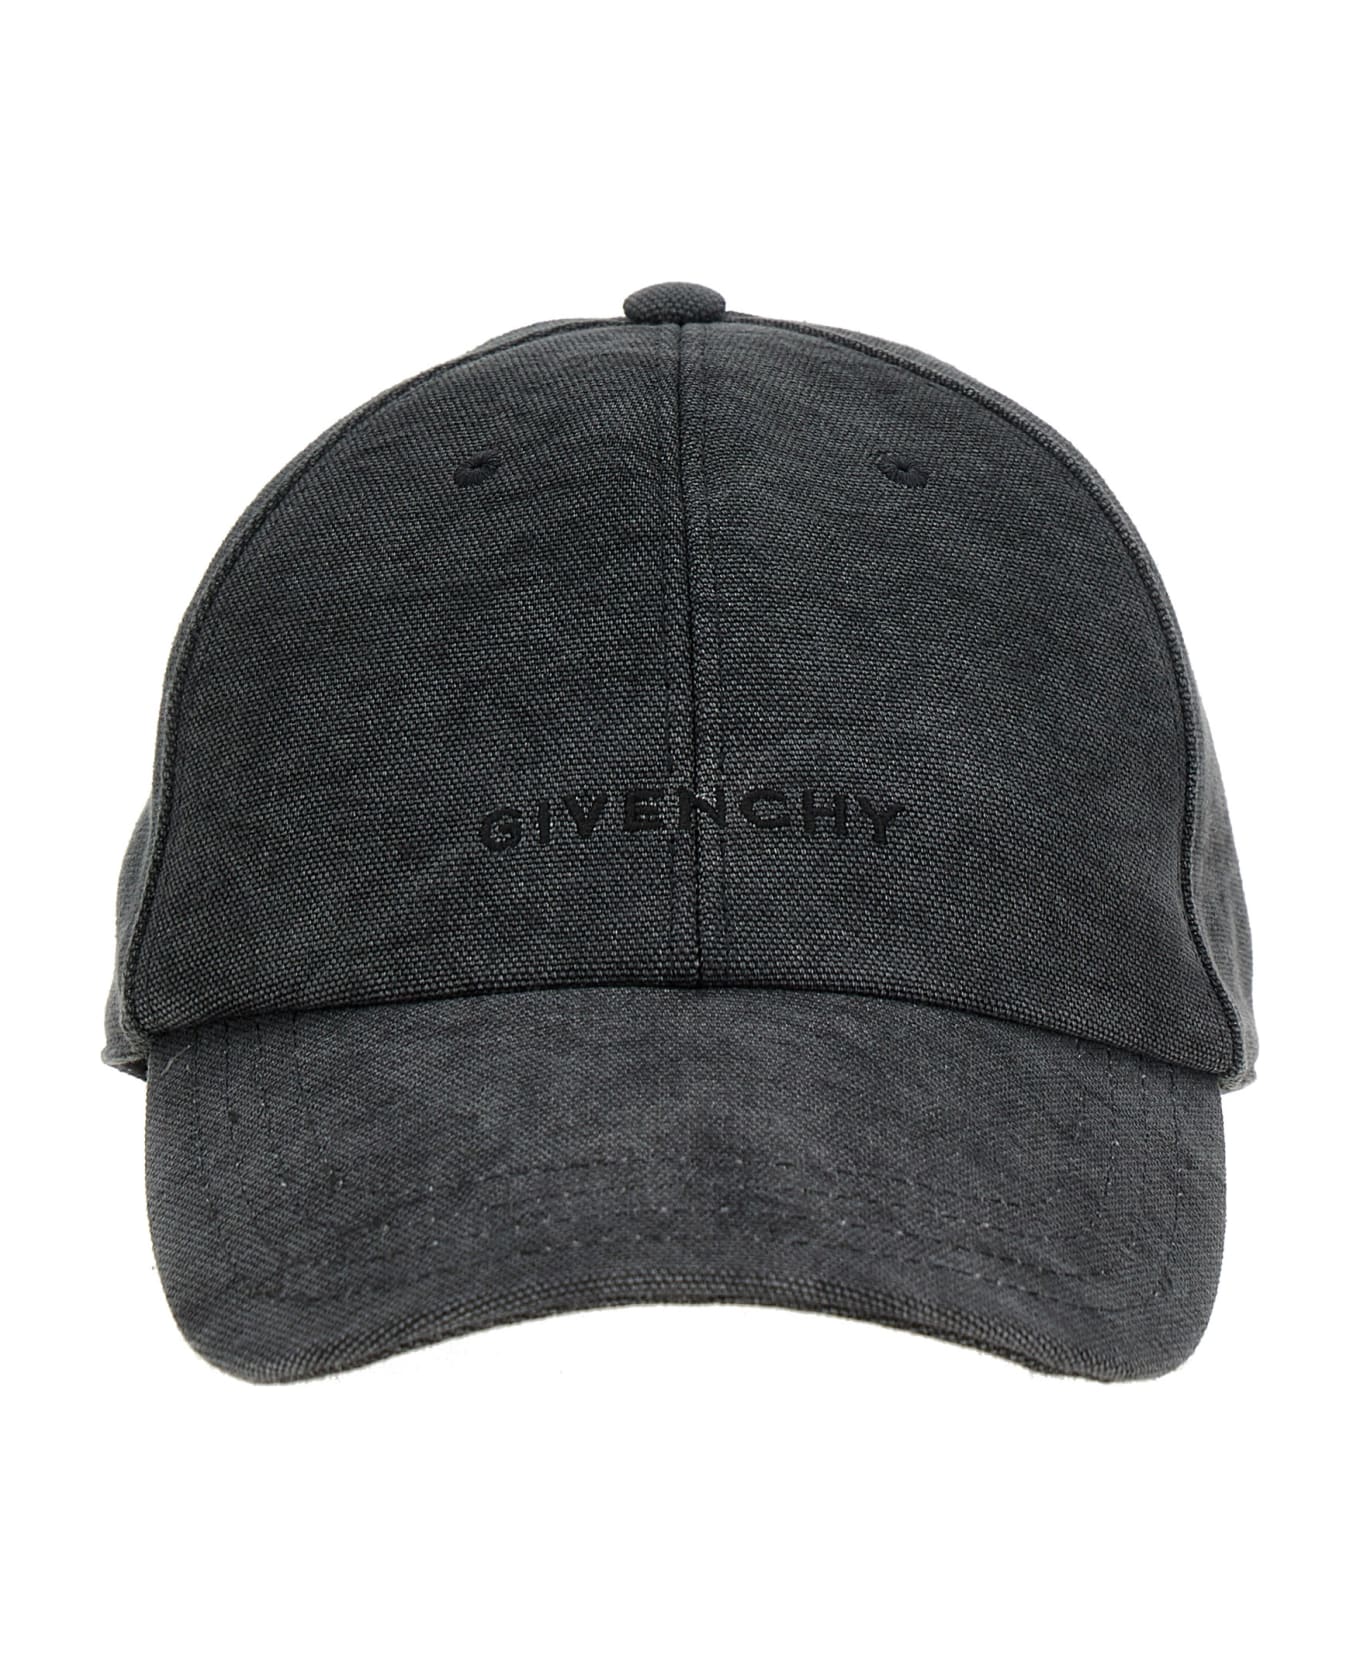 Givenchy Hat - GREY